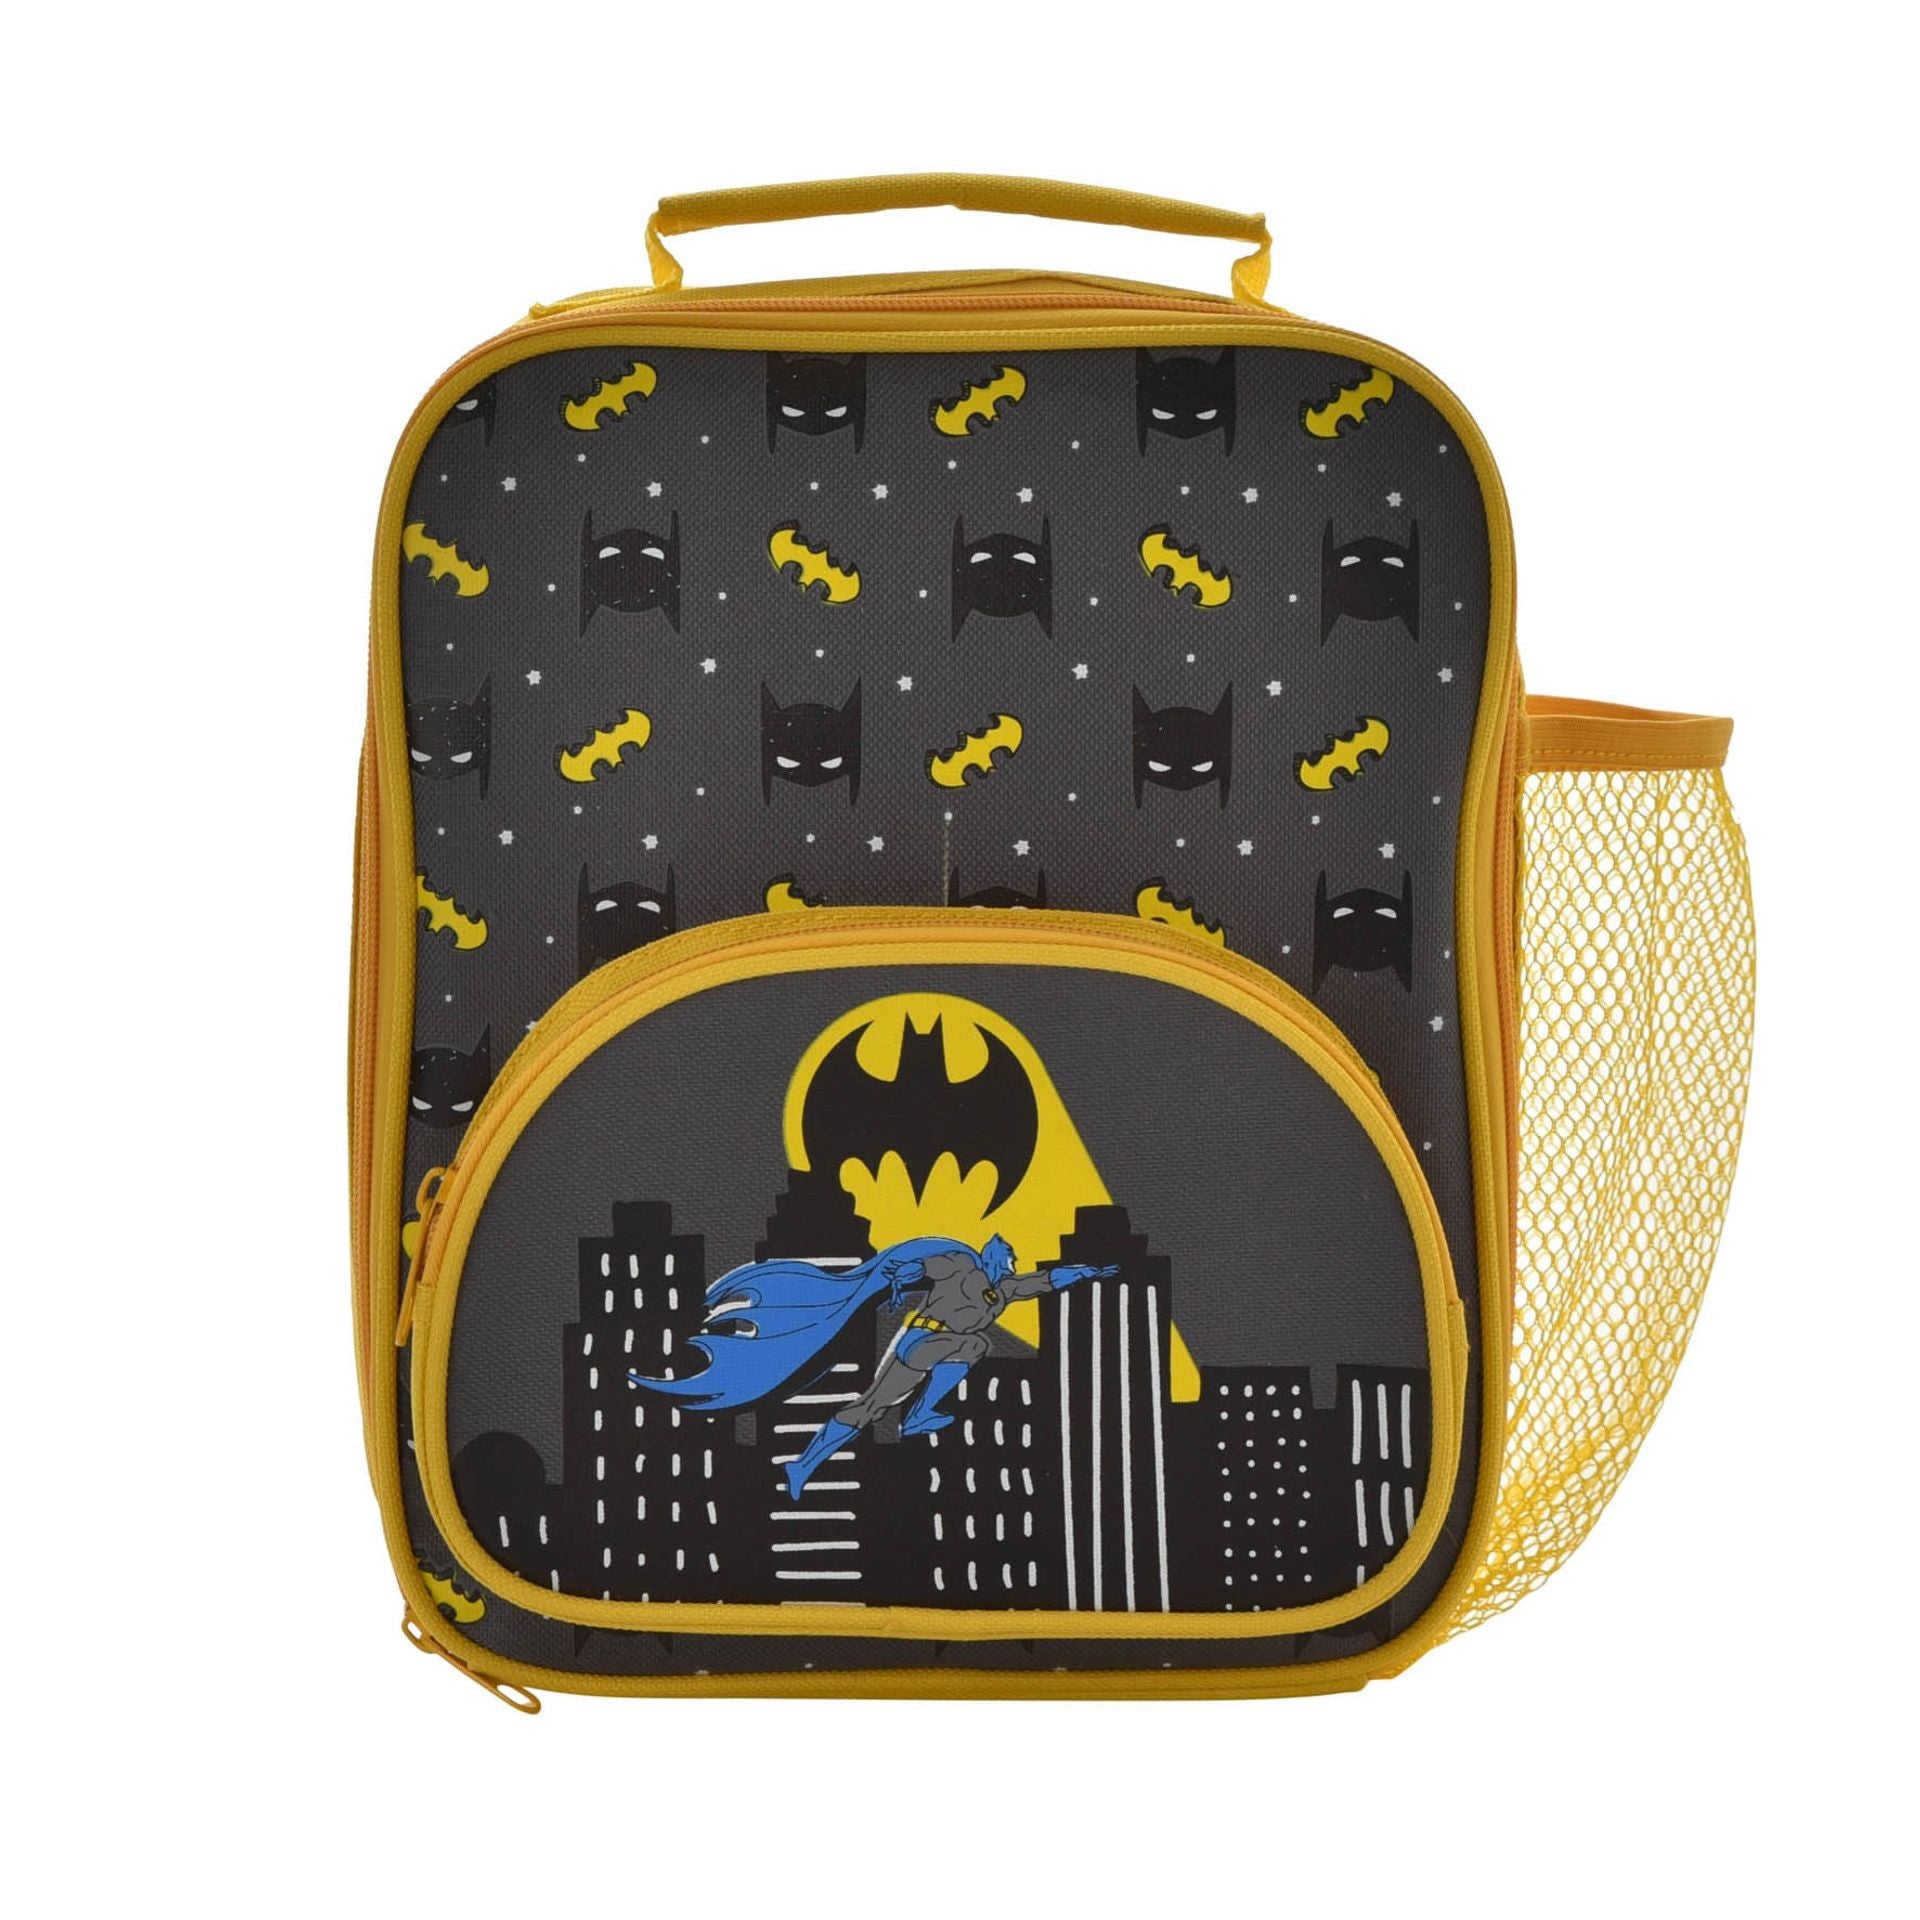 View Warner Bros Batman Lunch Bag information